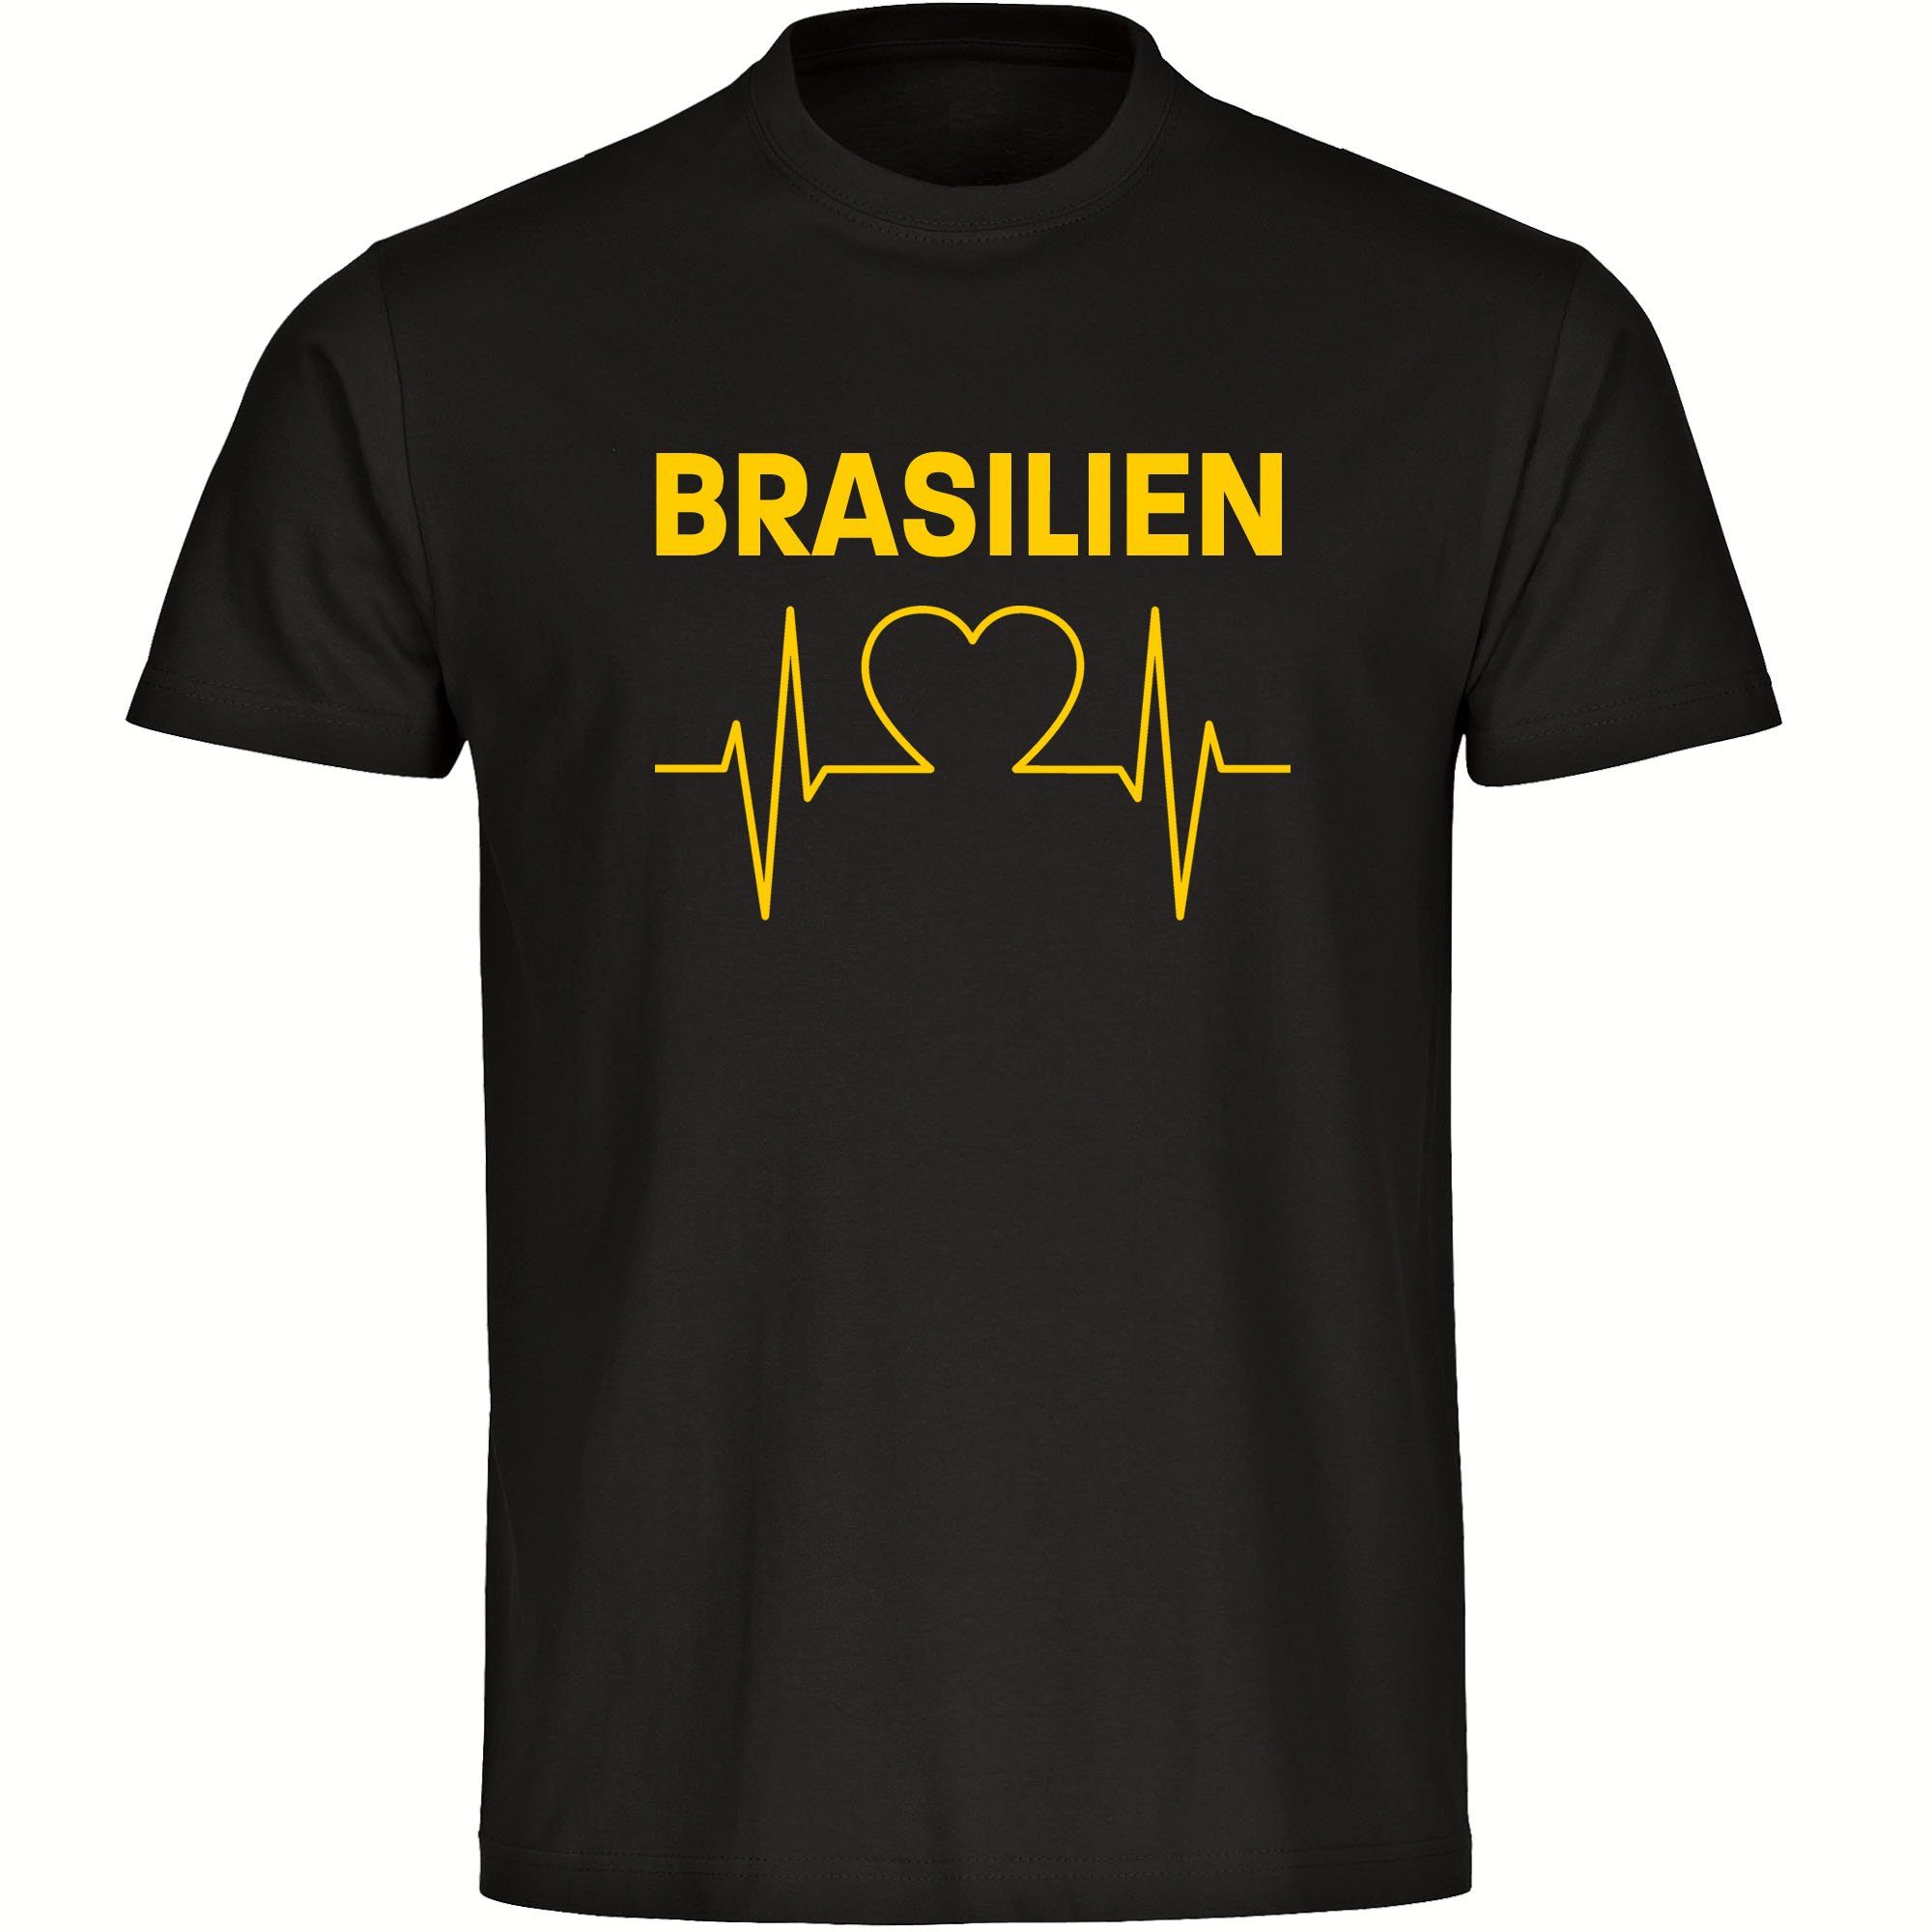 multifanshop T-Shirt Herren Brasilien - Herzschlag - Männer